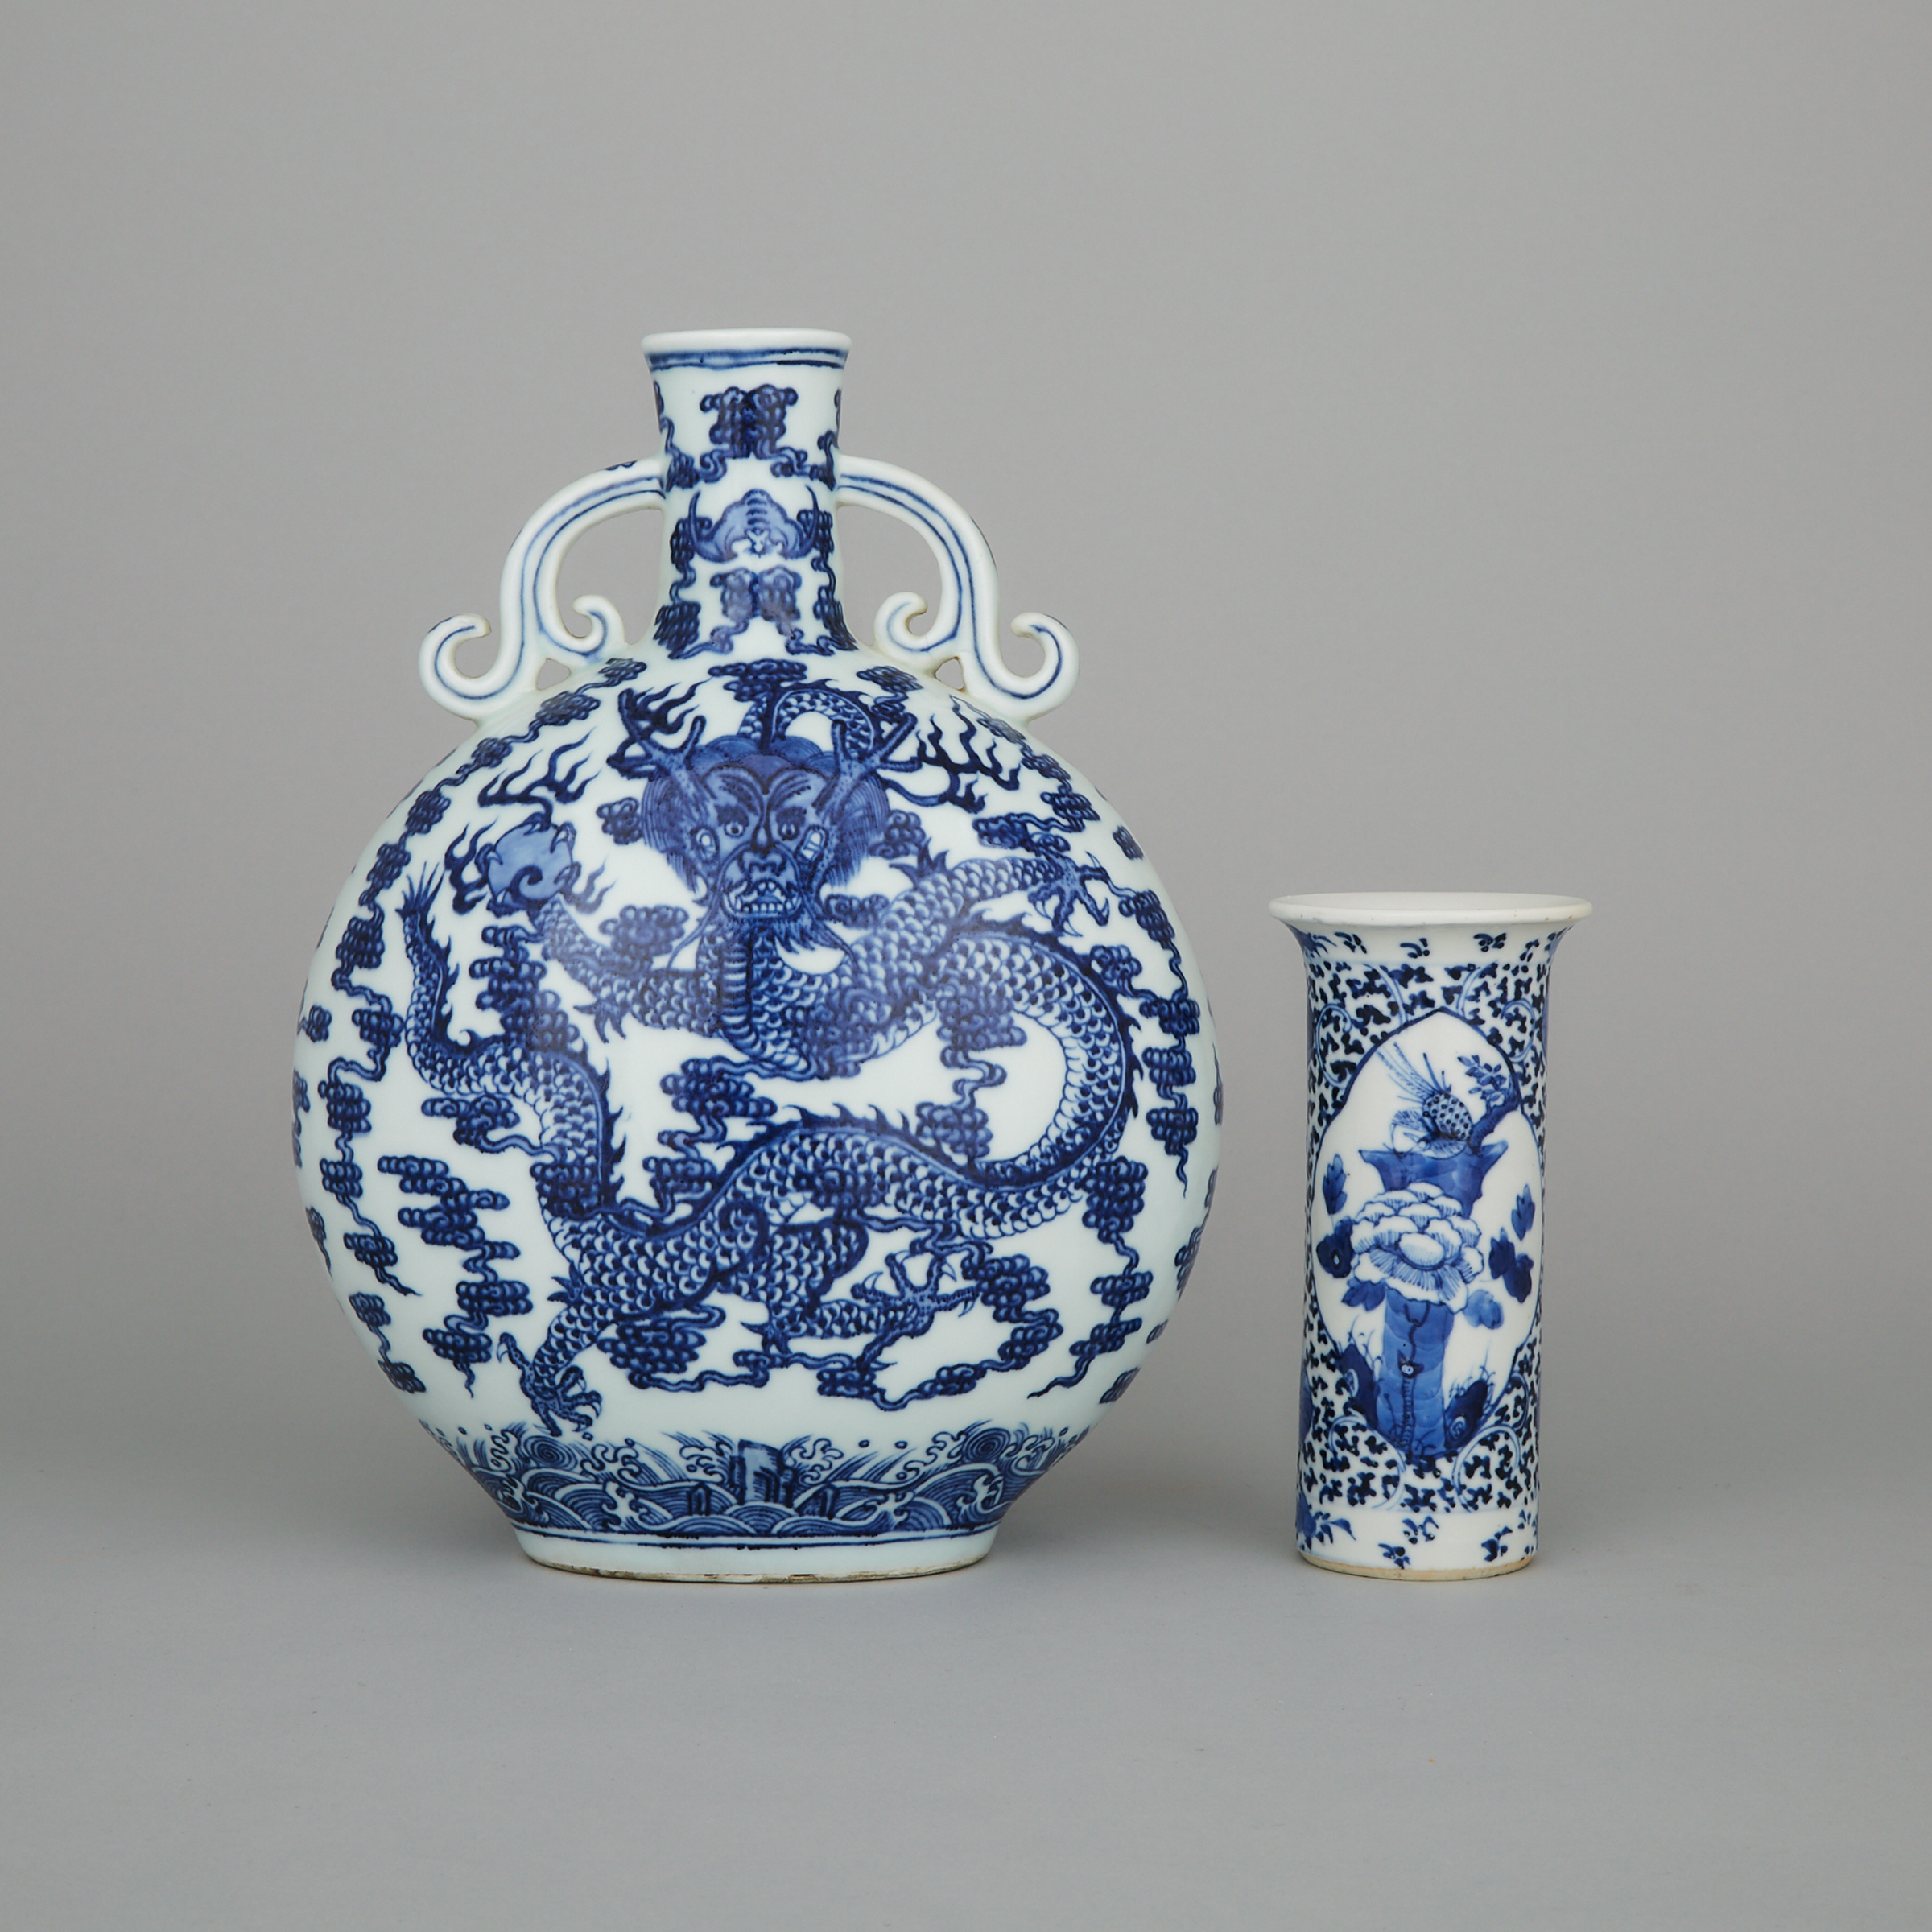 Two Blue and White Porcelain Vases